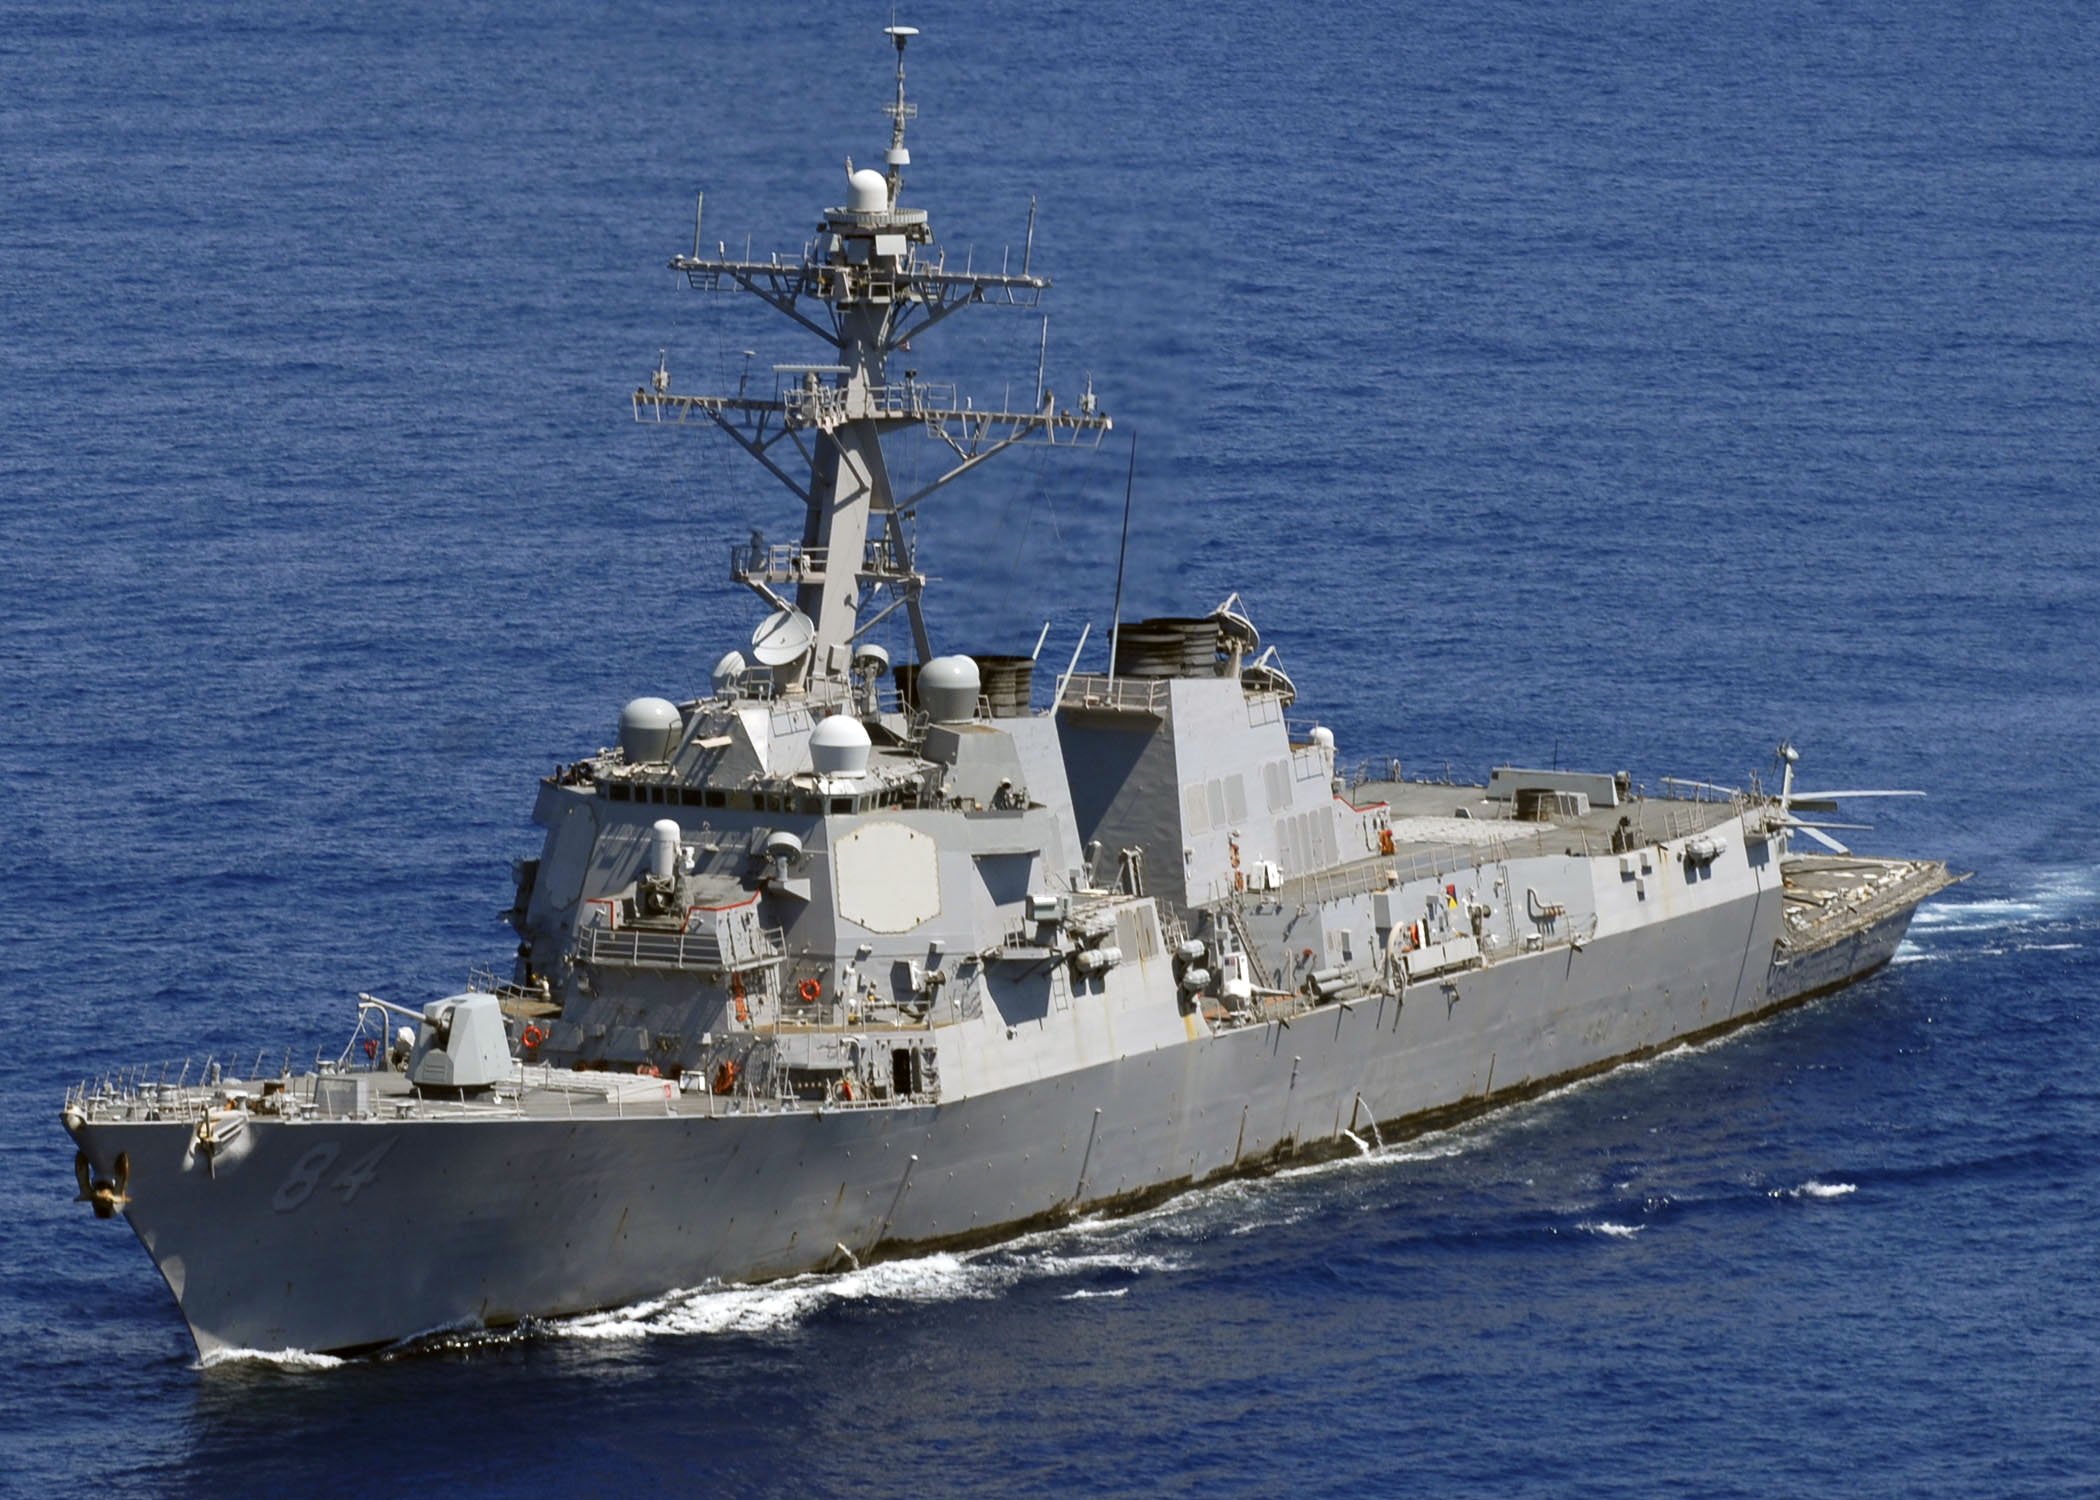 US_Navy_080705-N-2735T-128_The_guided-missile_destroyer_USS_Bulkeley_(DDG_84),_a_member_of_the_Nassau_Strike_Group_(NASSG),_transits_the_Atlantic_Ocean.jpg